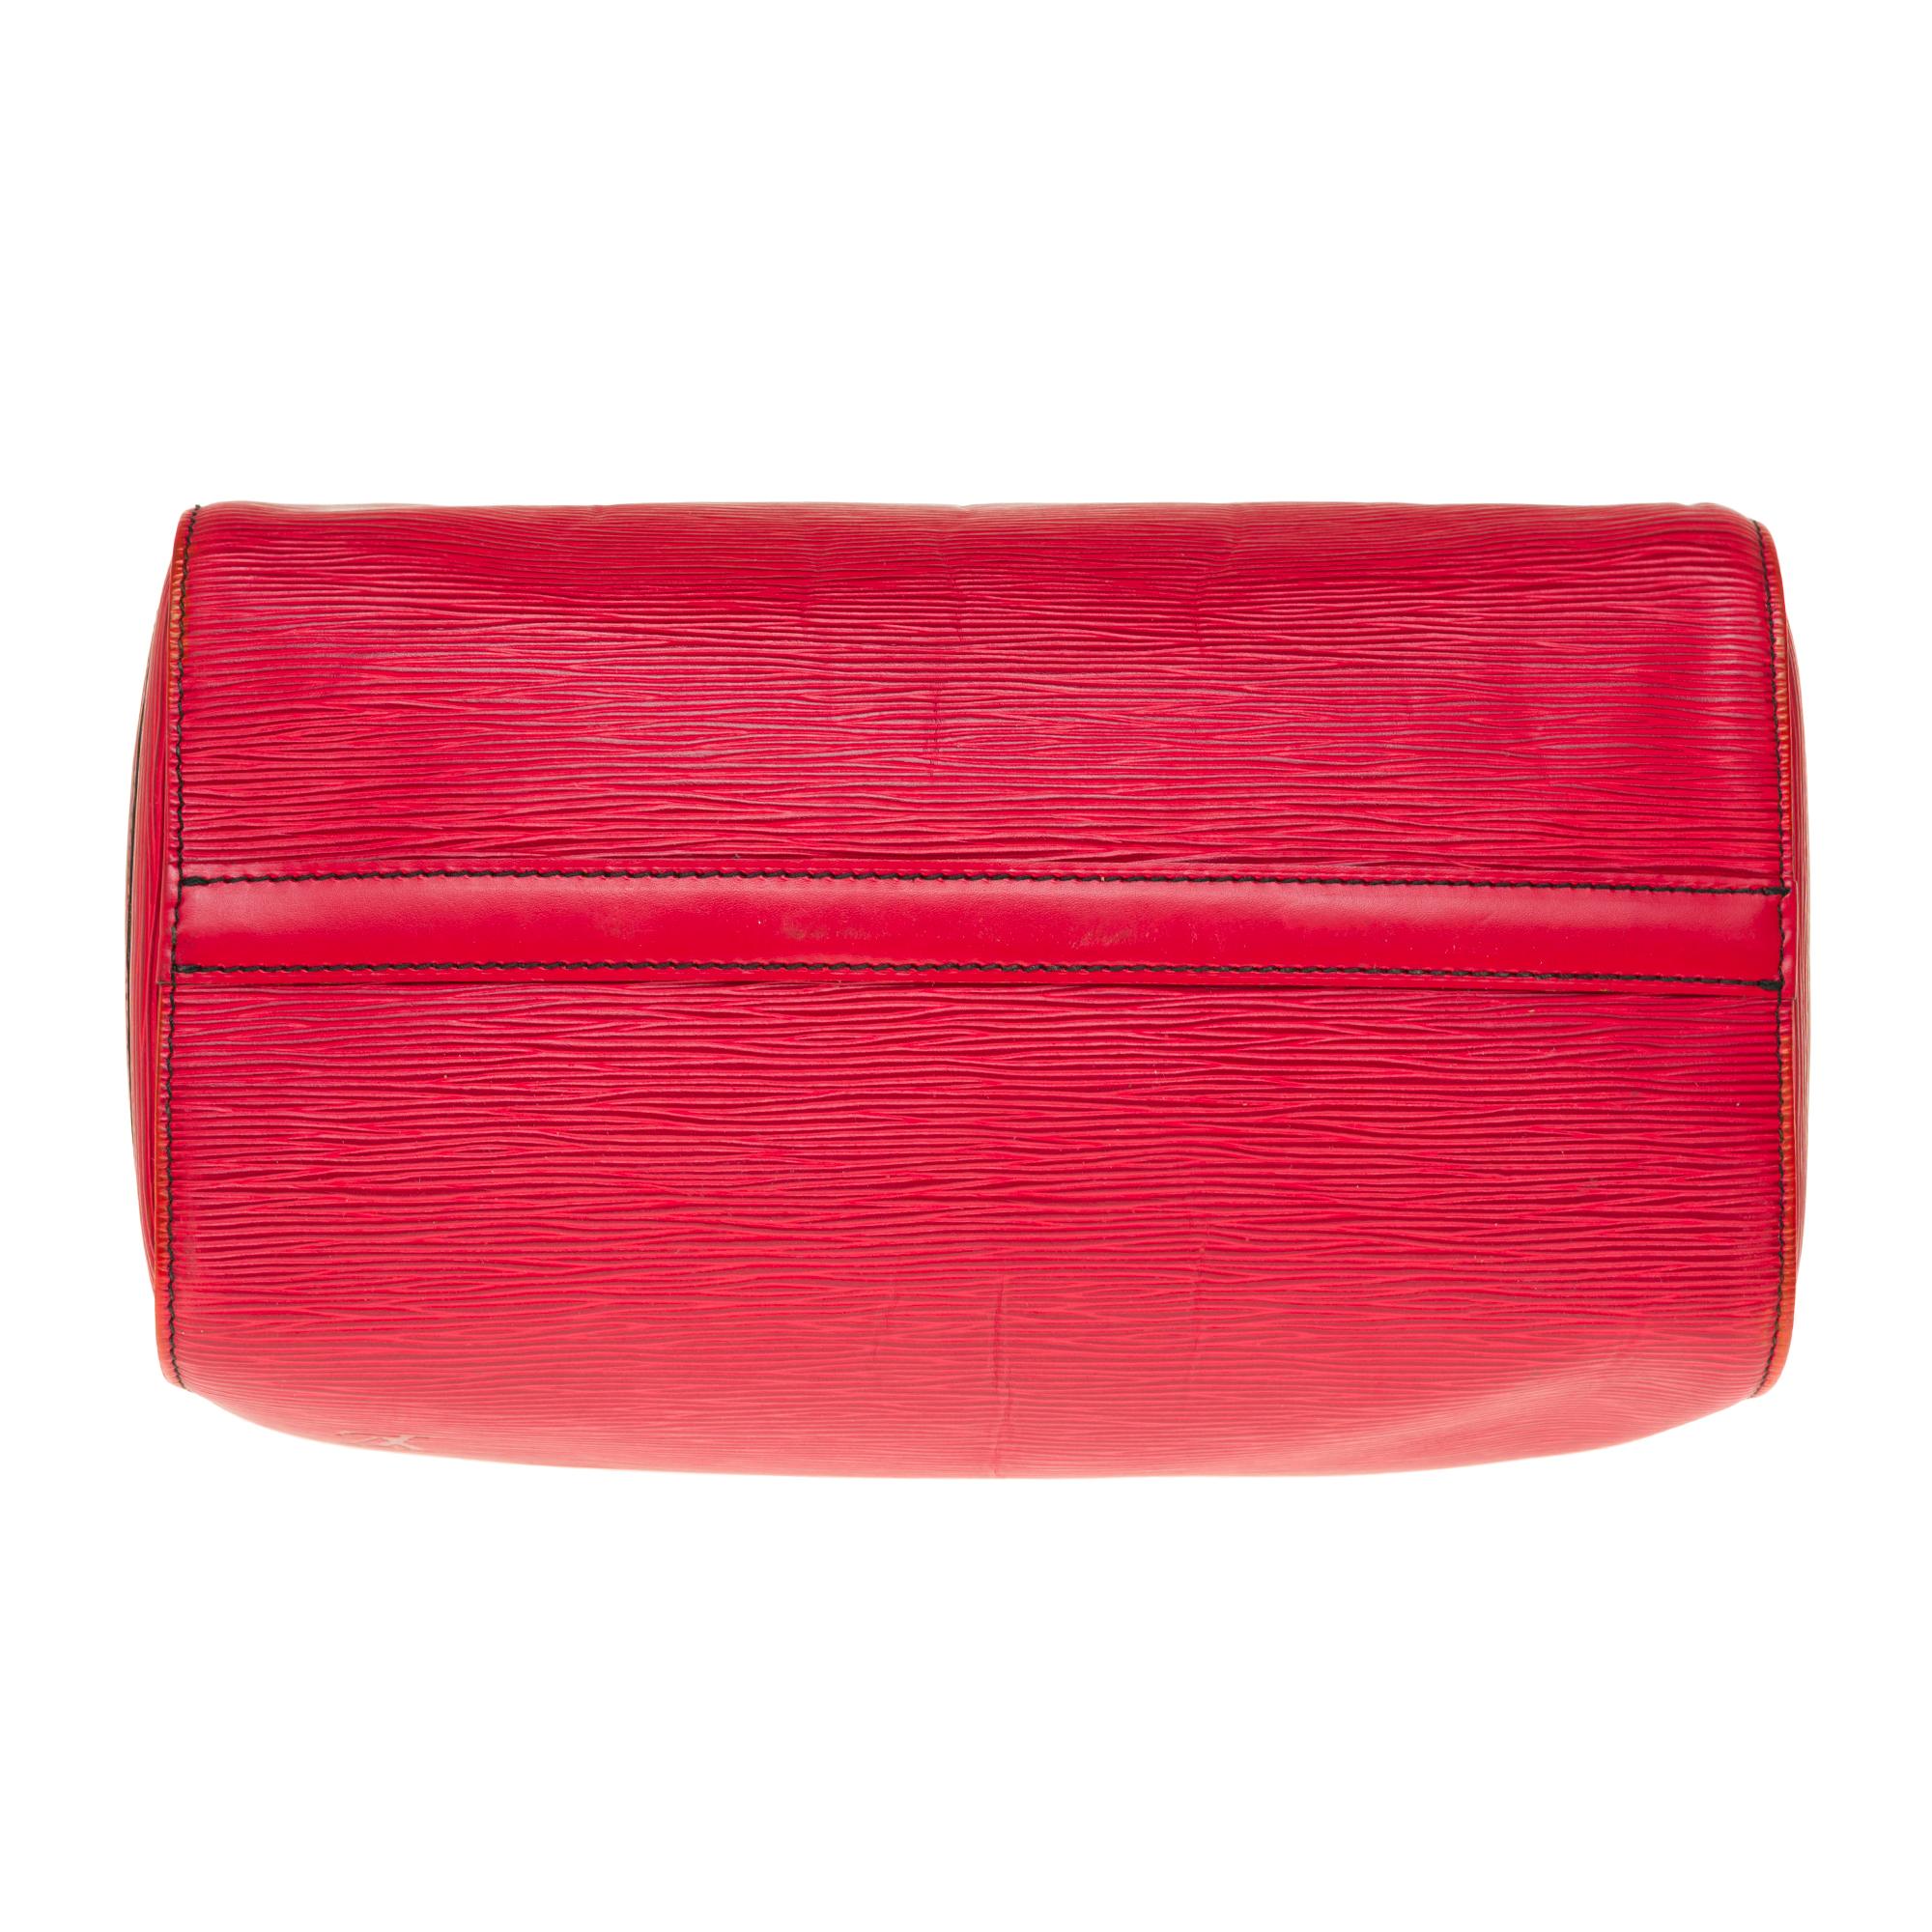 Louis Vuitton Speedy 35 handbag in red épi leather 4